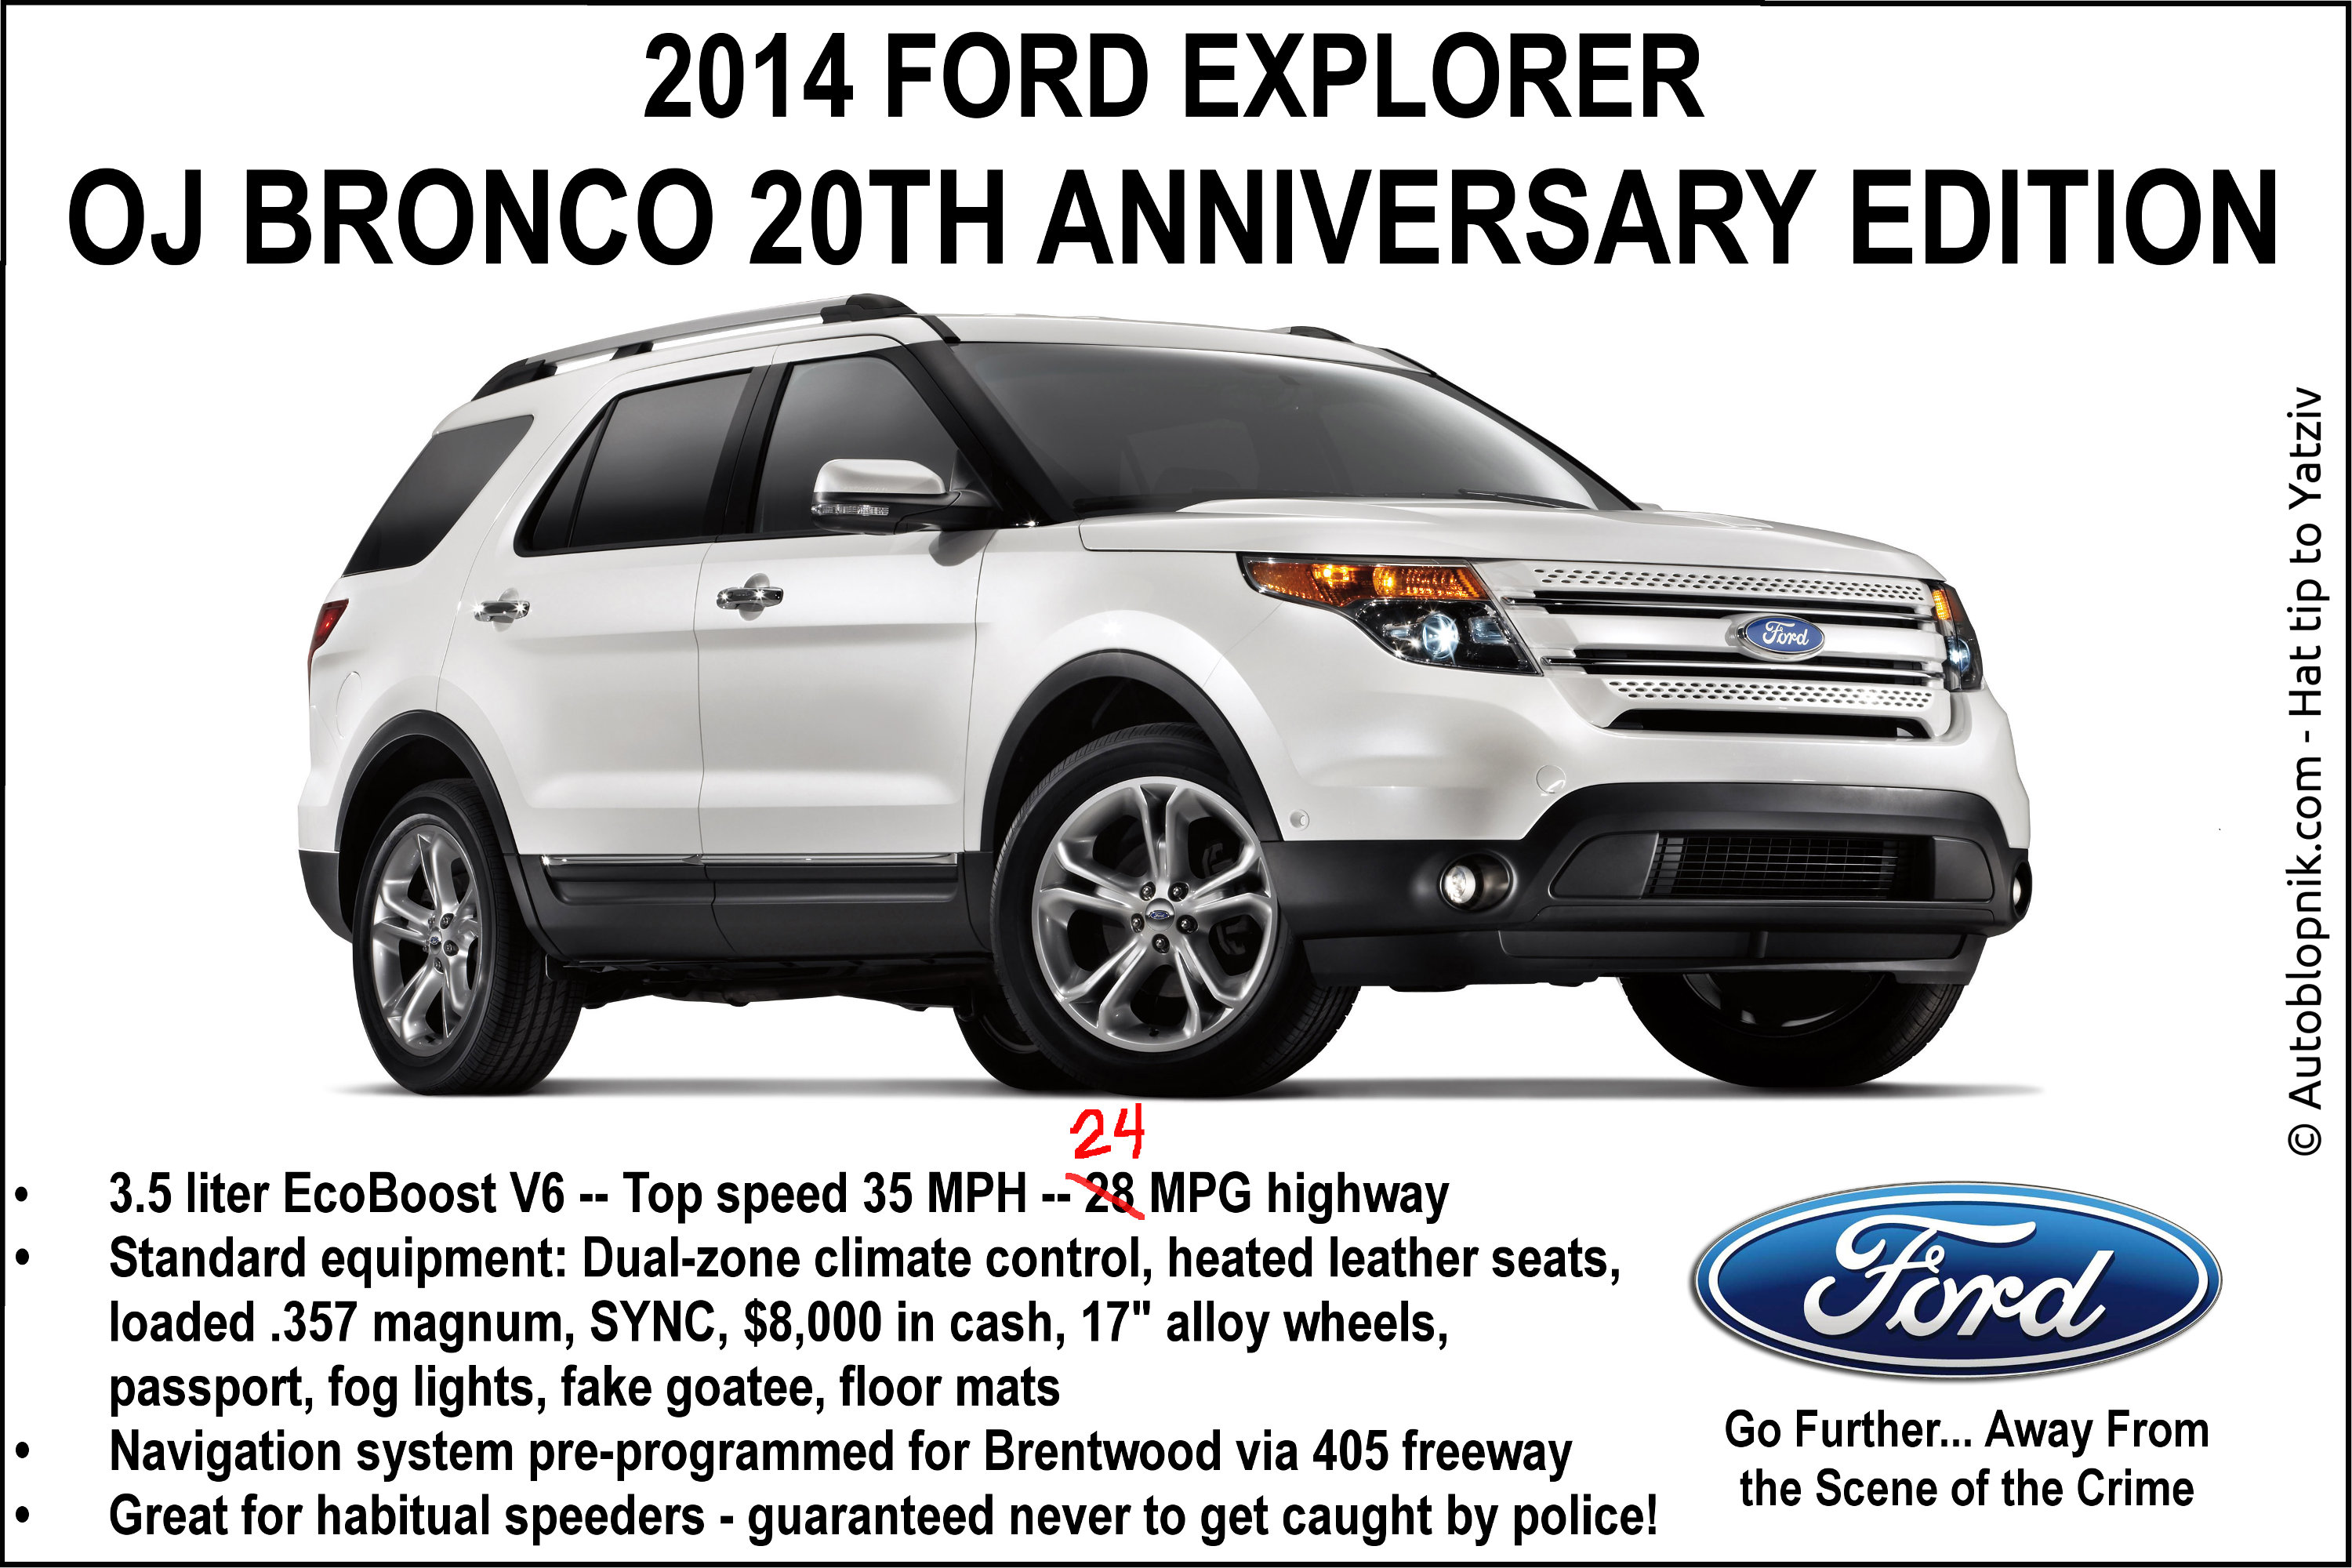 Ford Explorer OJ Bronco Edition